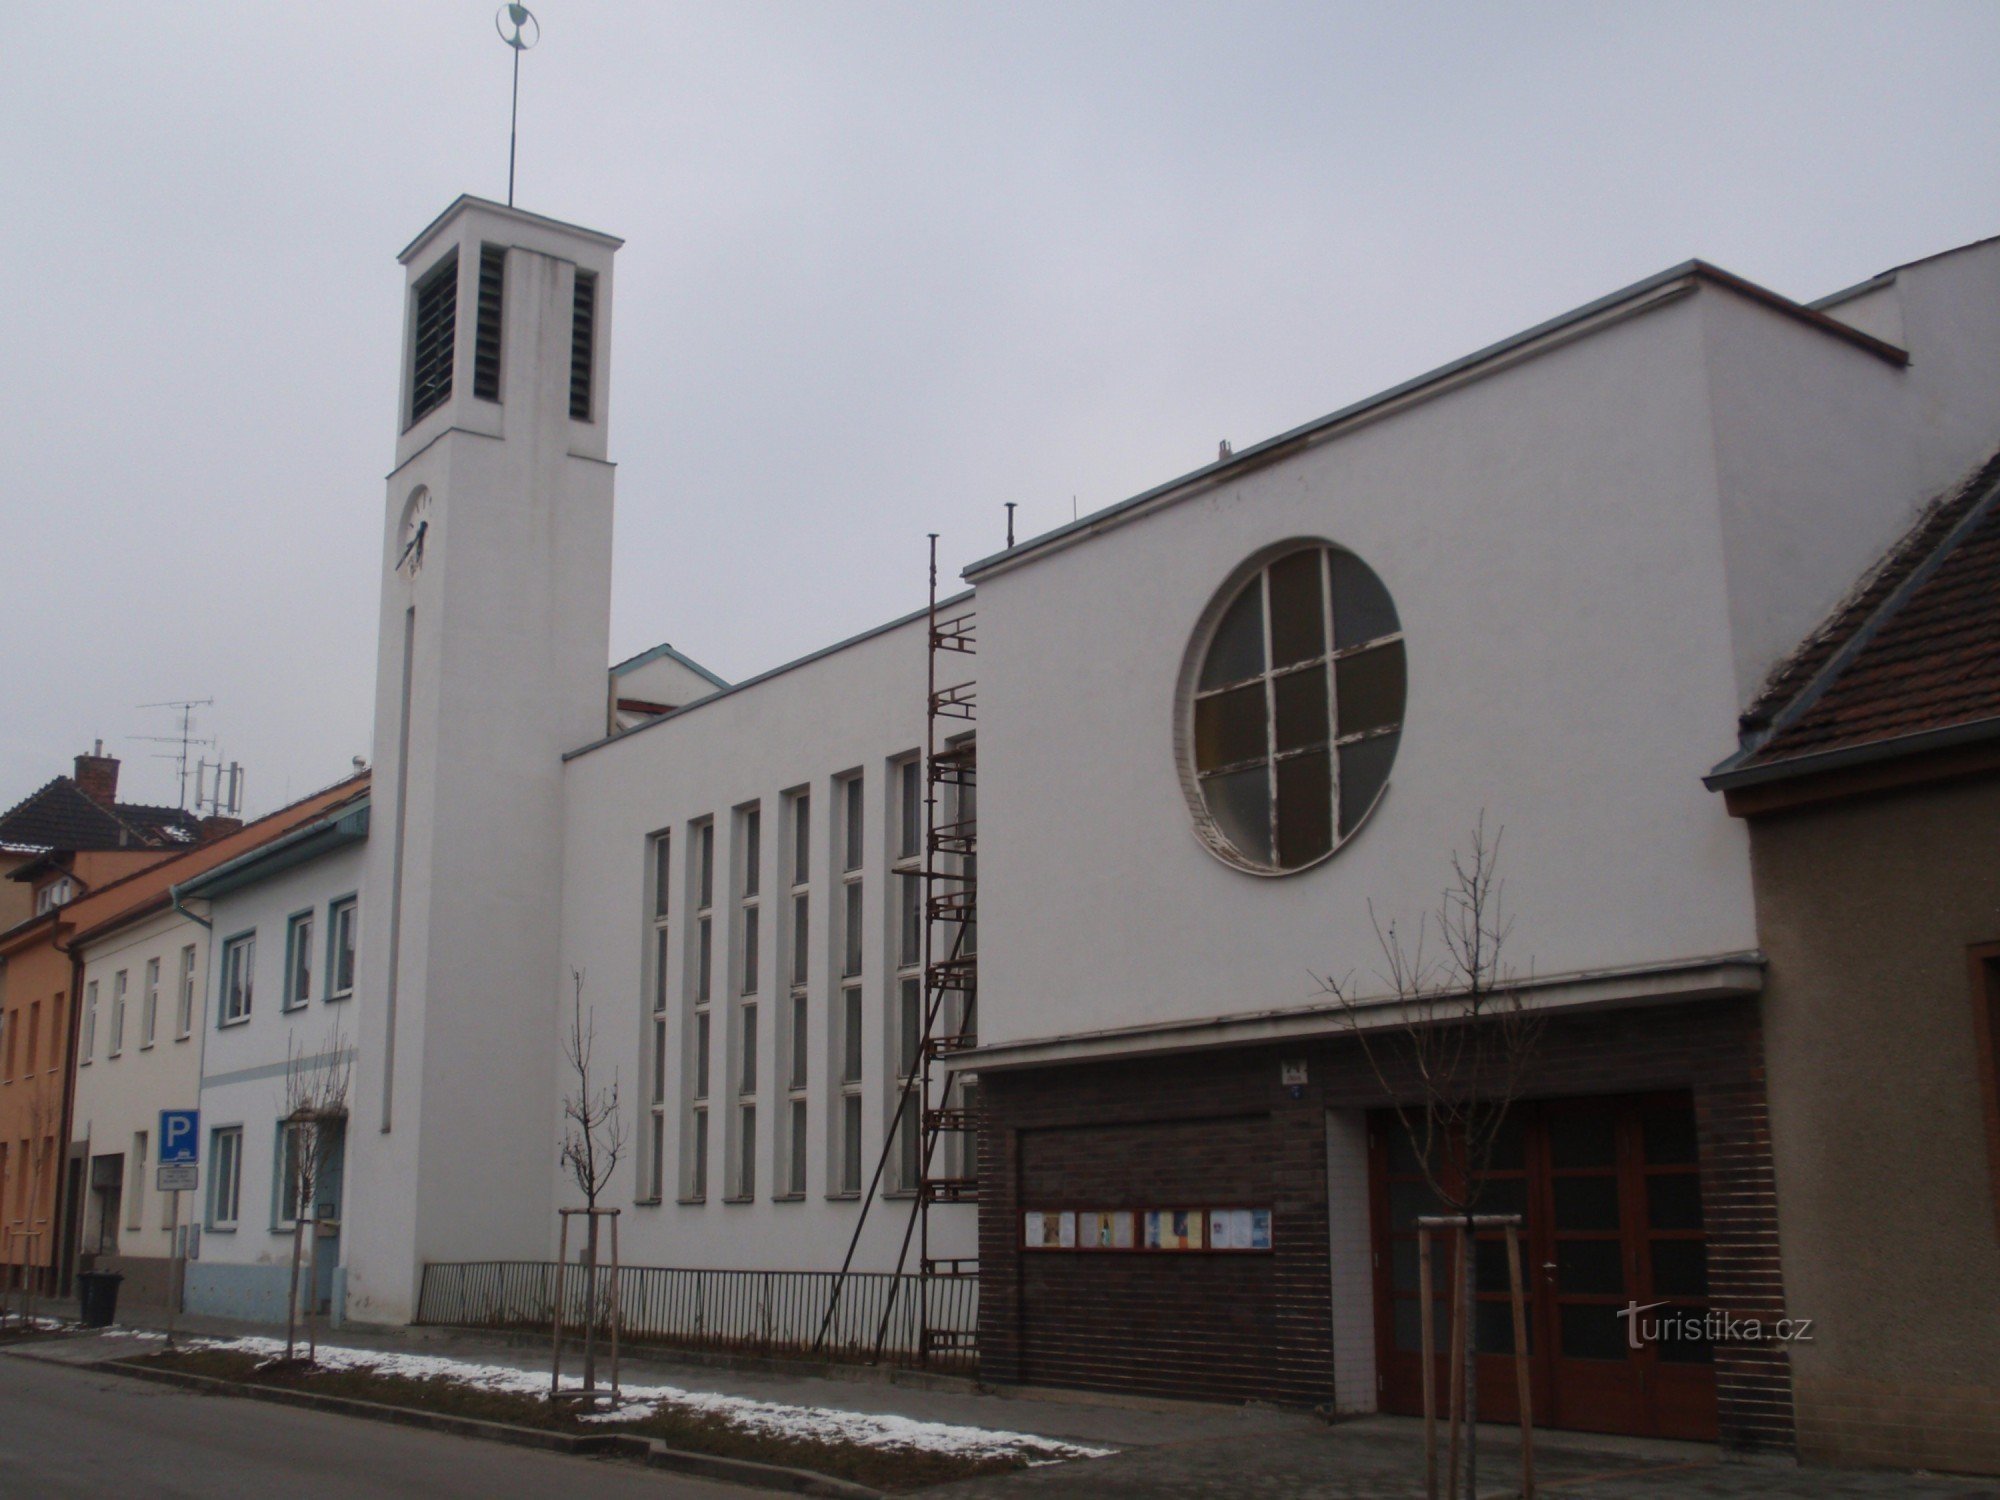 Church of the Czech Brethren Evangelical Church in Brno-Židenice